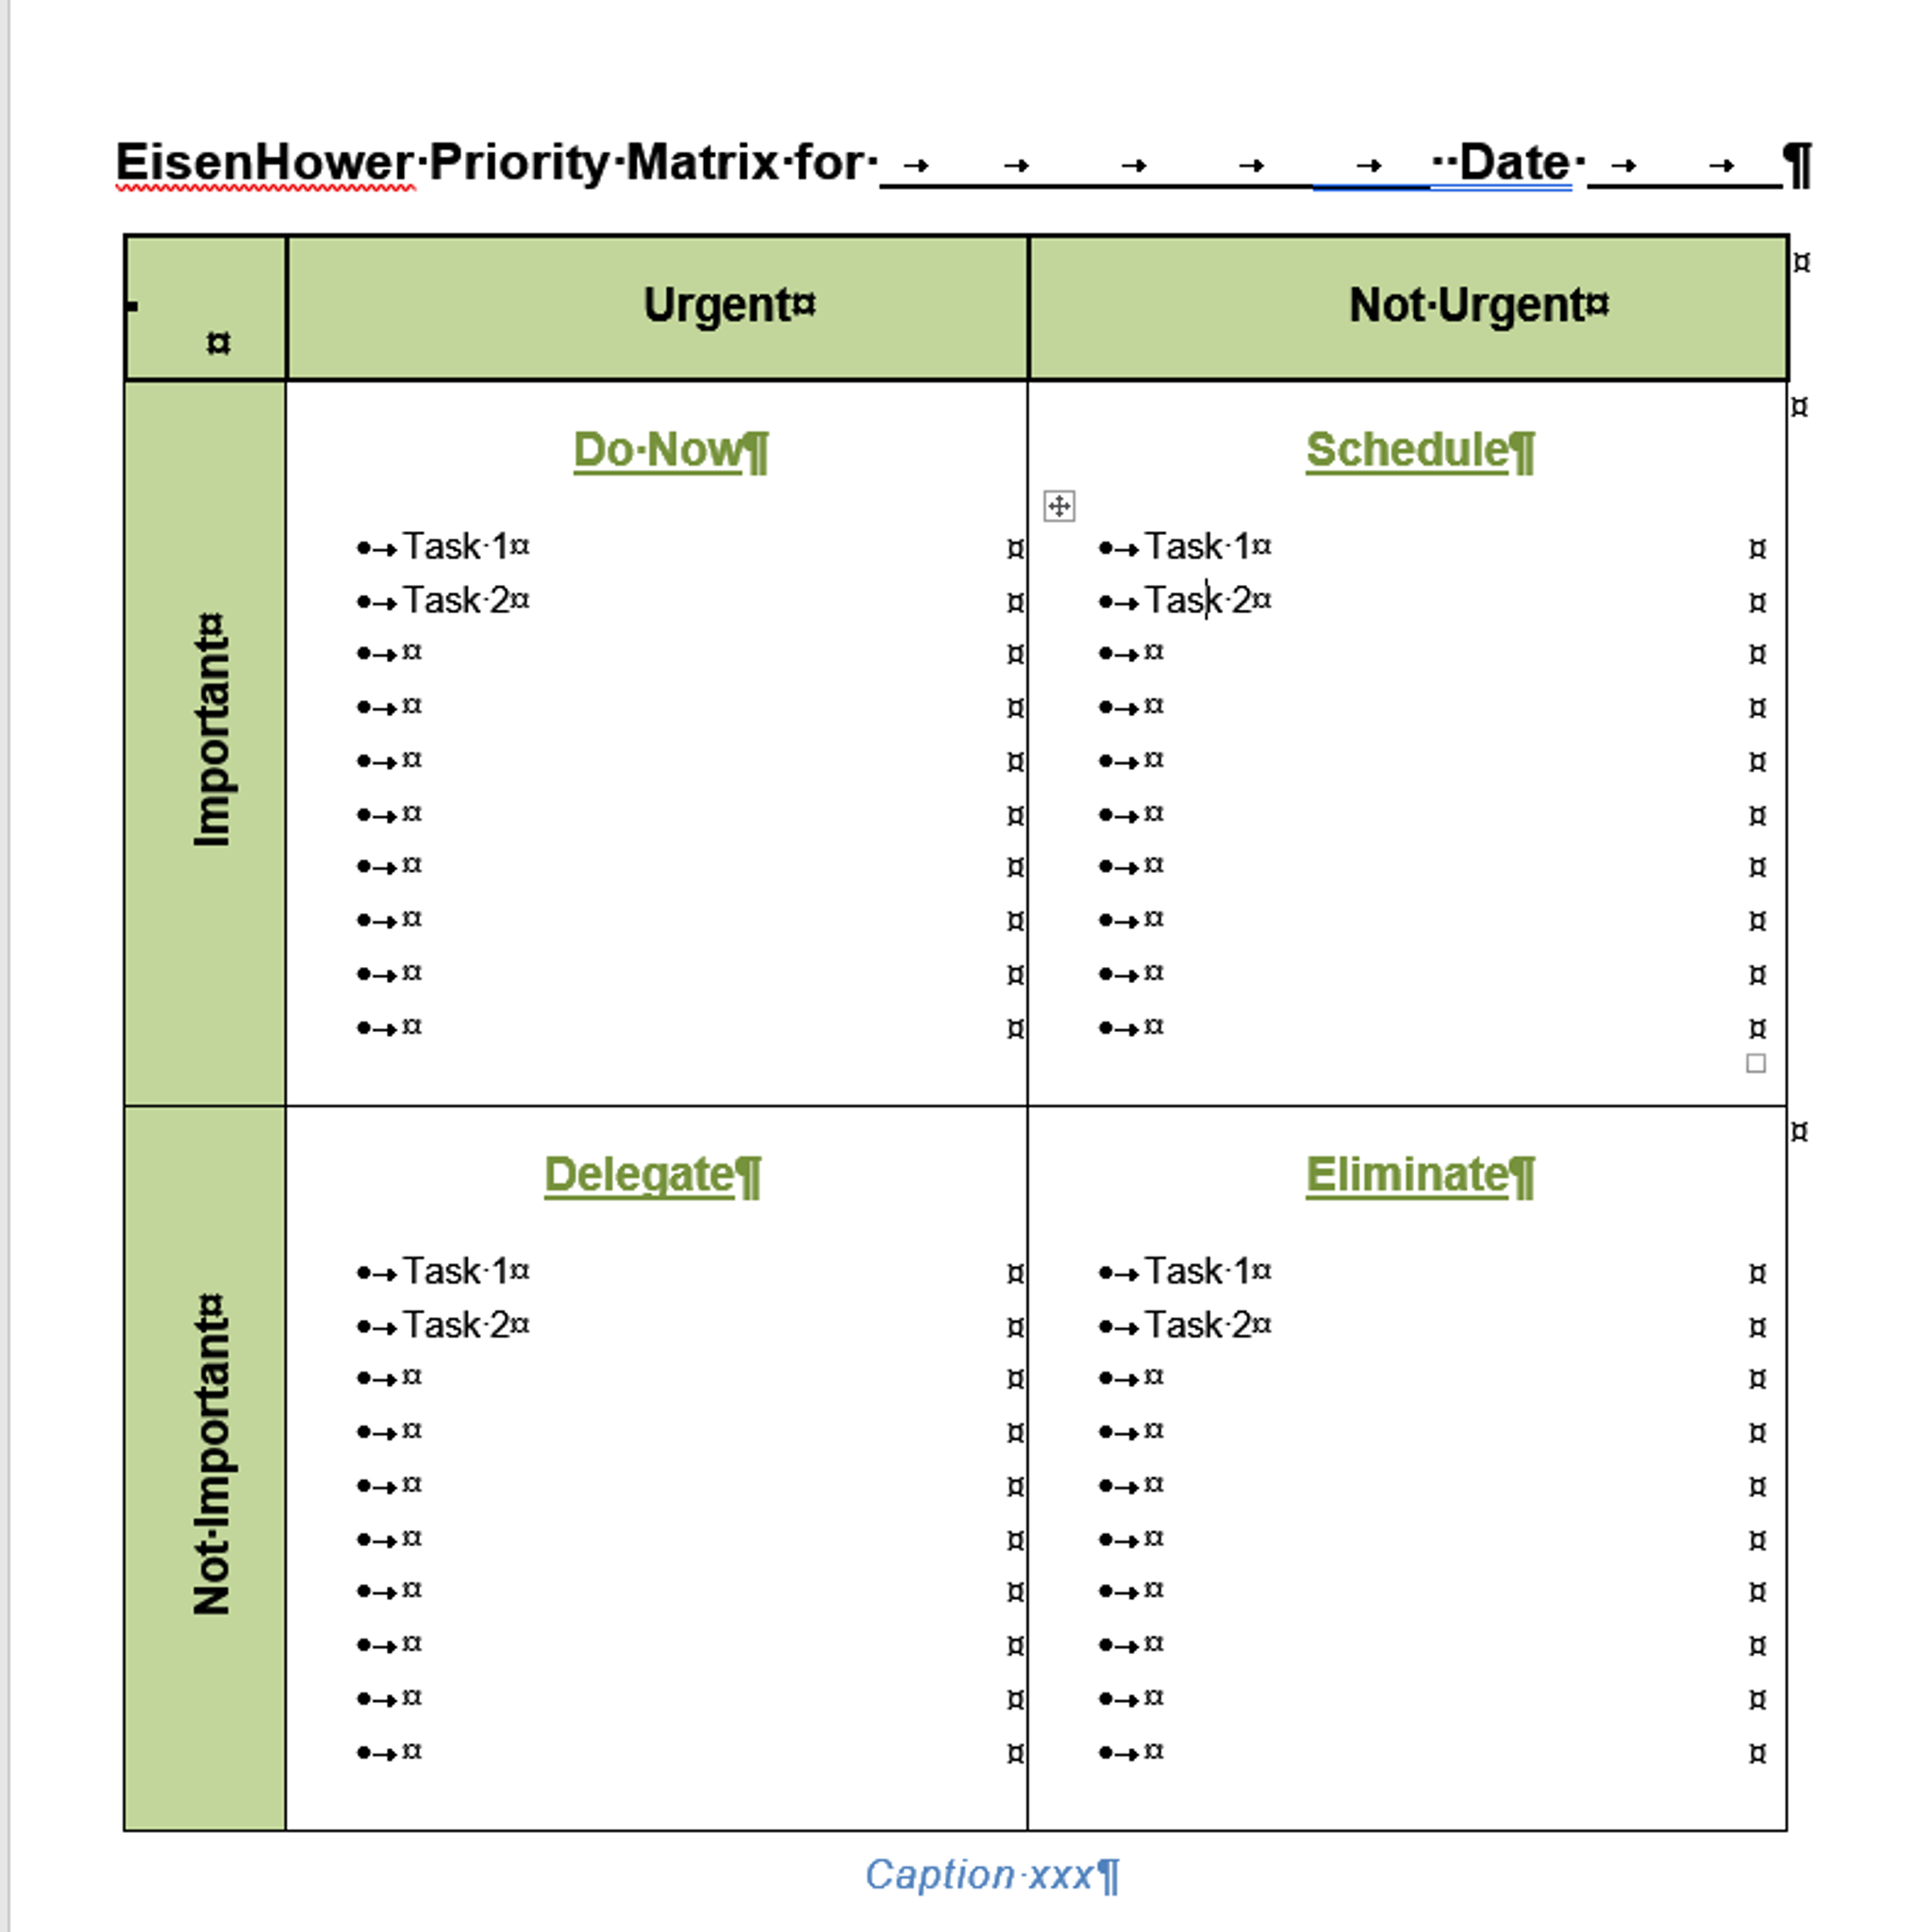 urgency priority matrix